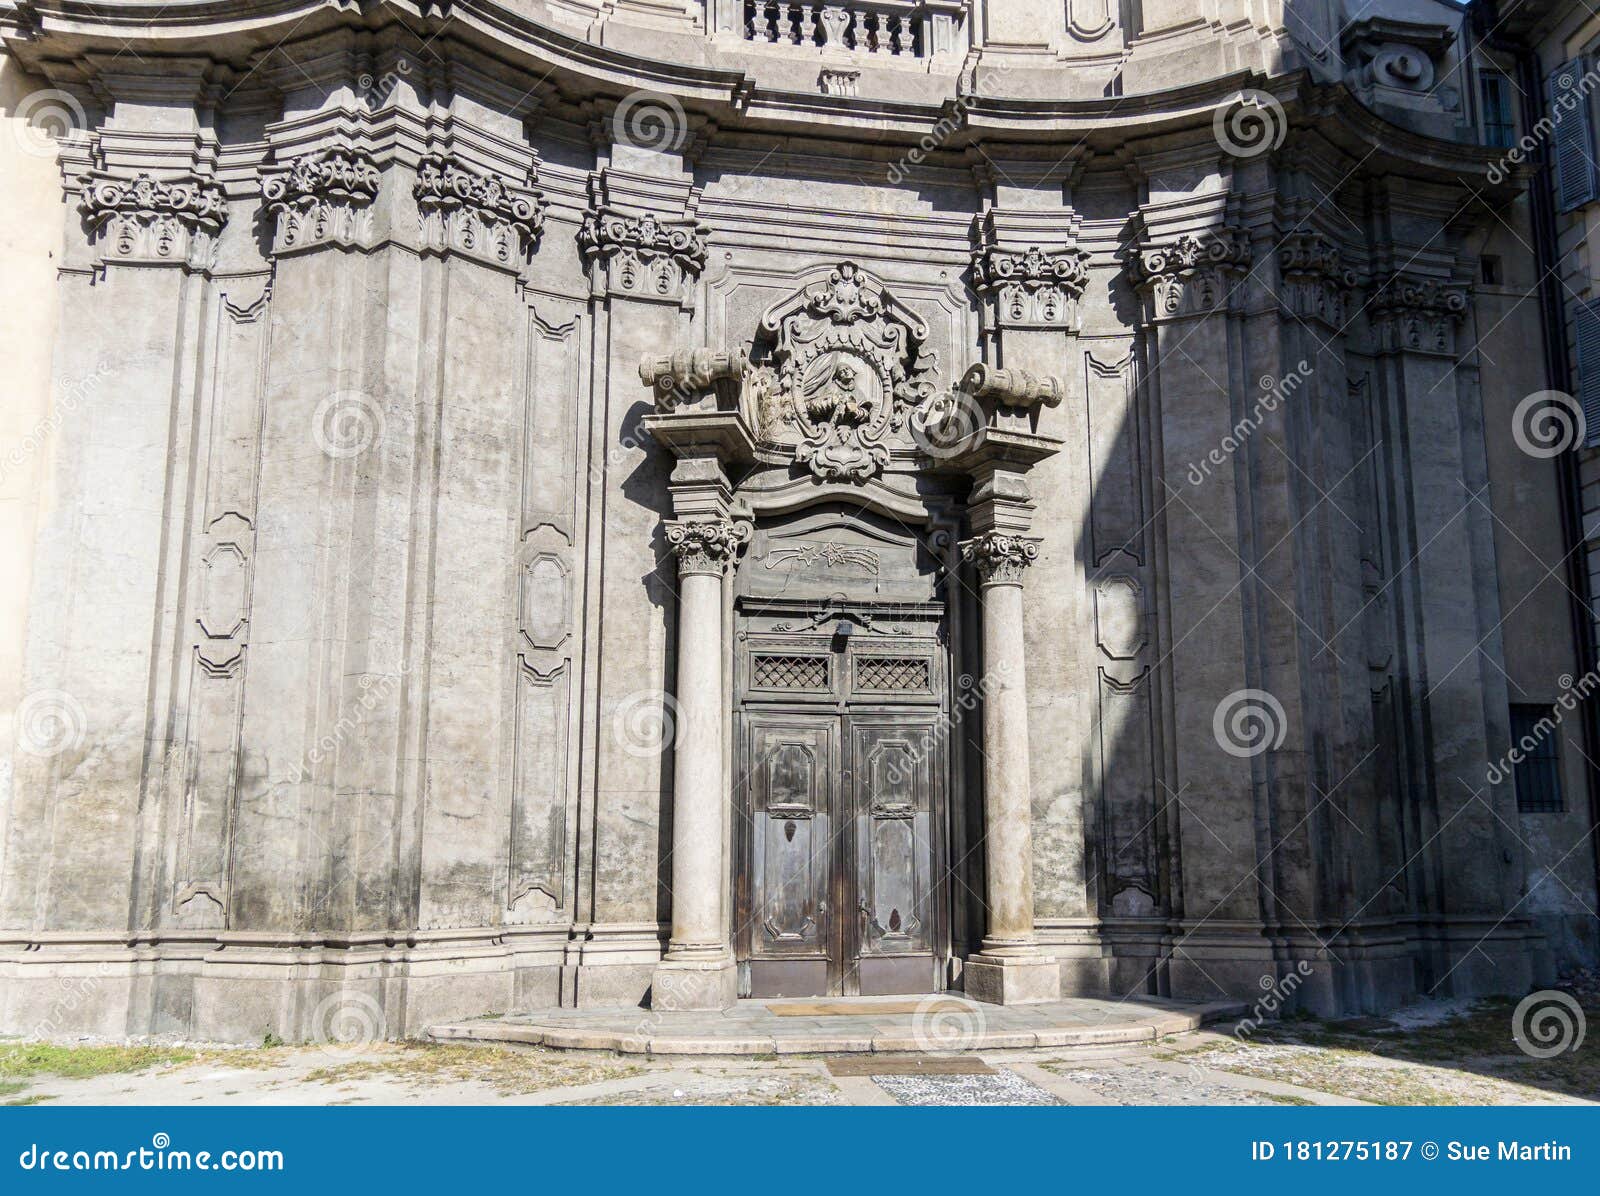 ornate church entrance, milan, italy